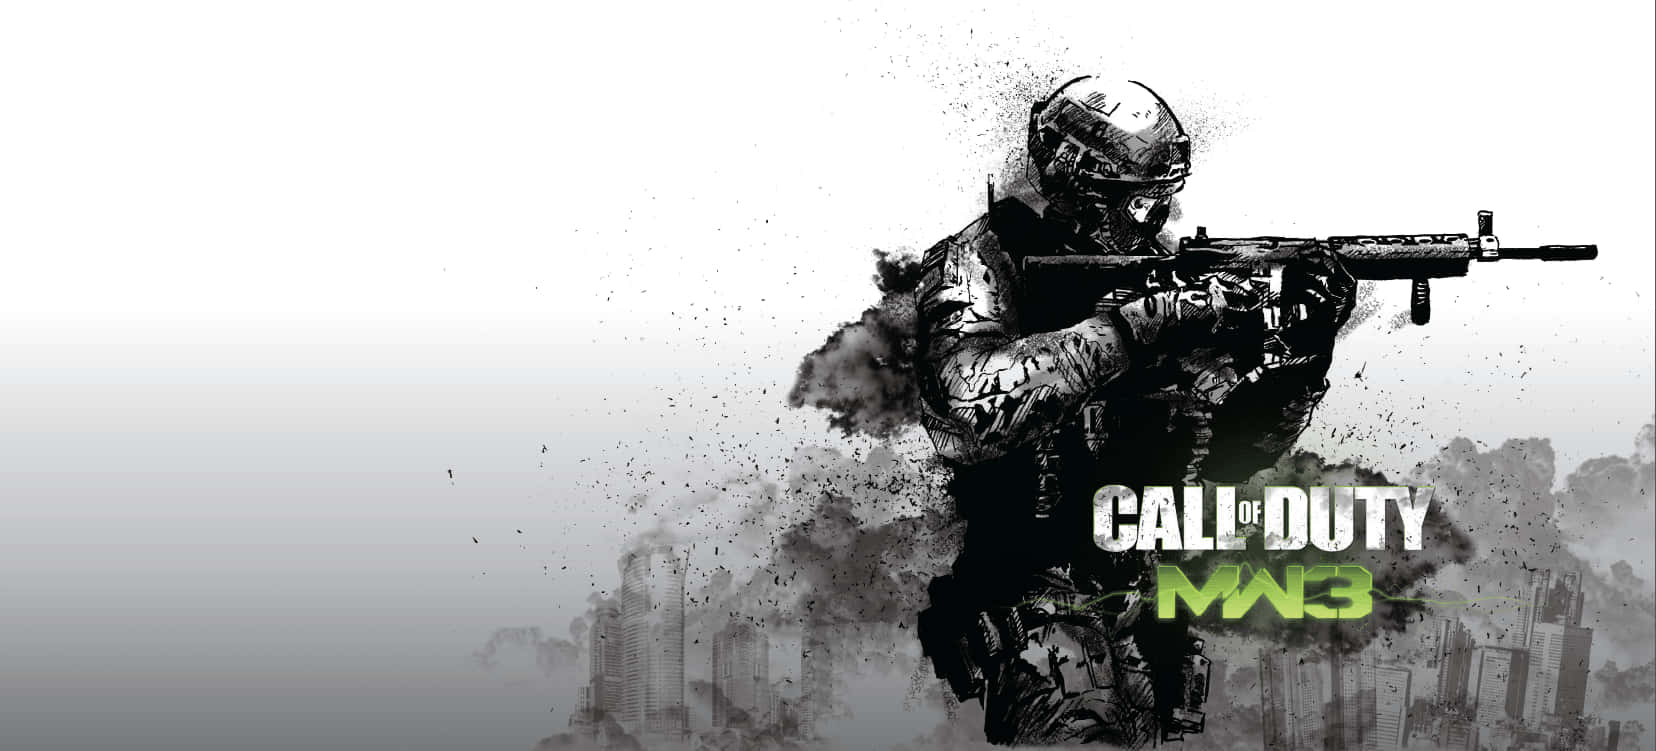 Call Of Duty Modern Warfare 3 Clean Aesthetic Soldier Wallpaper